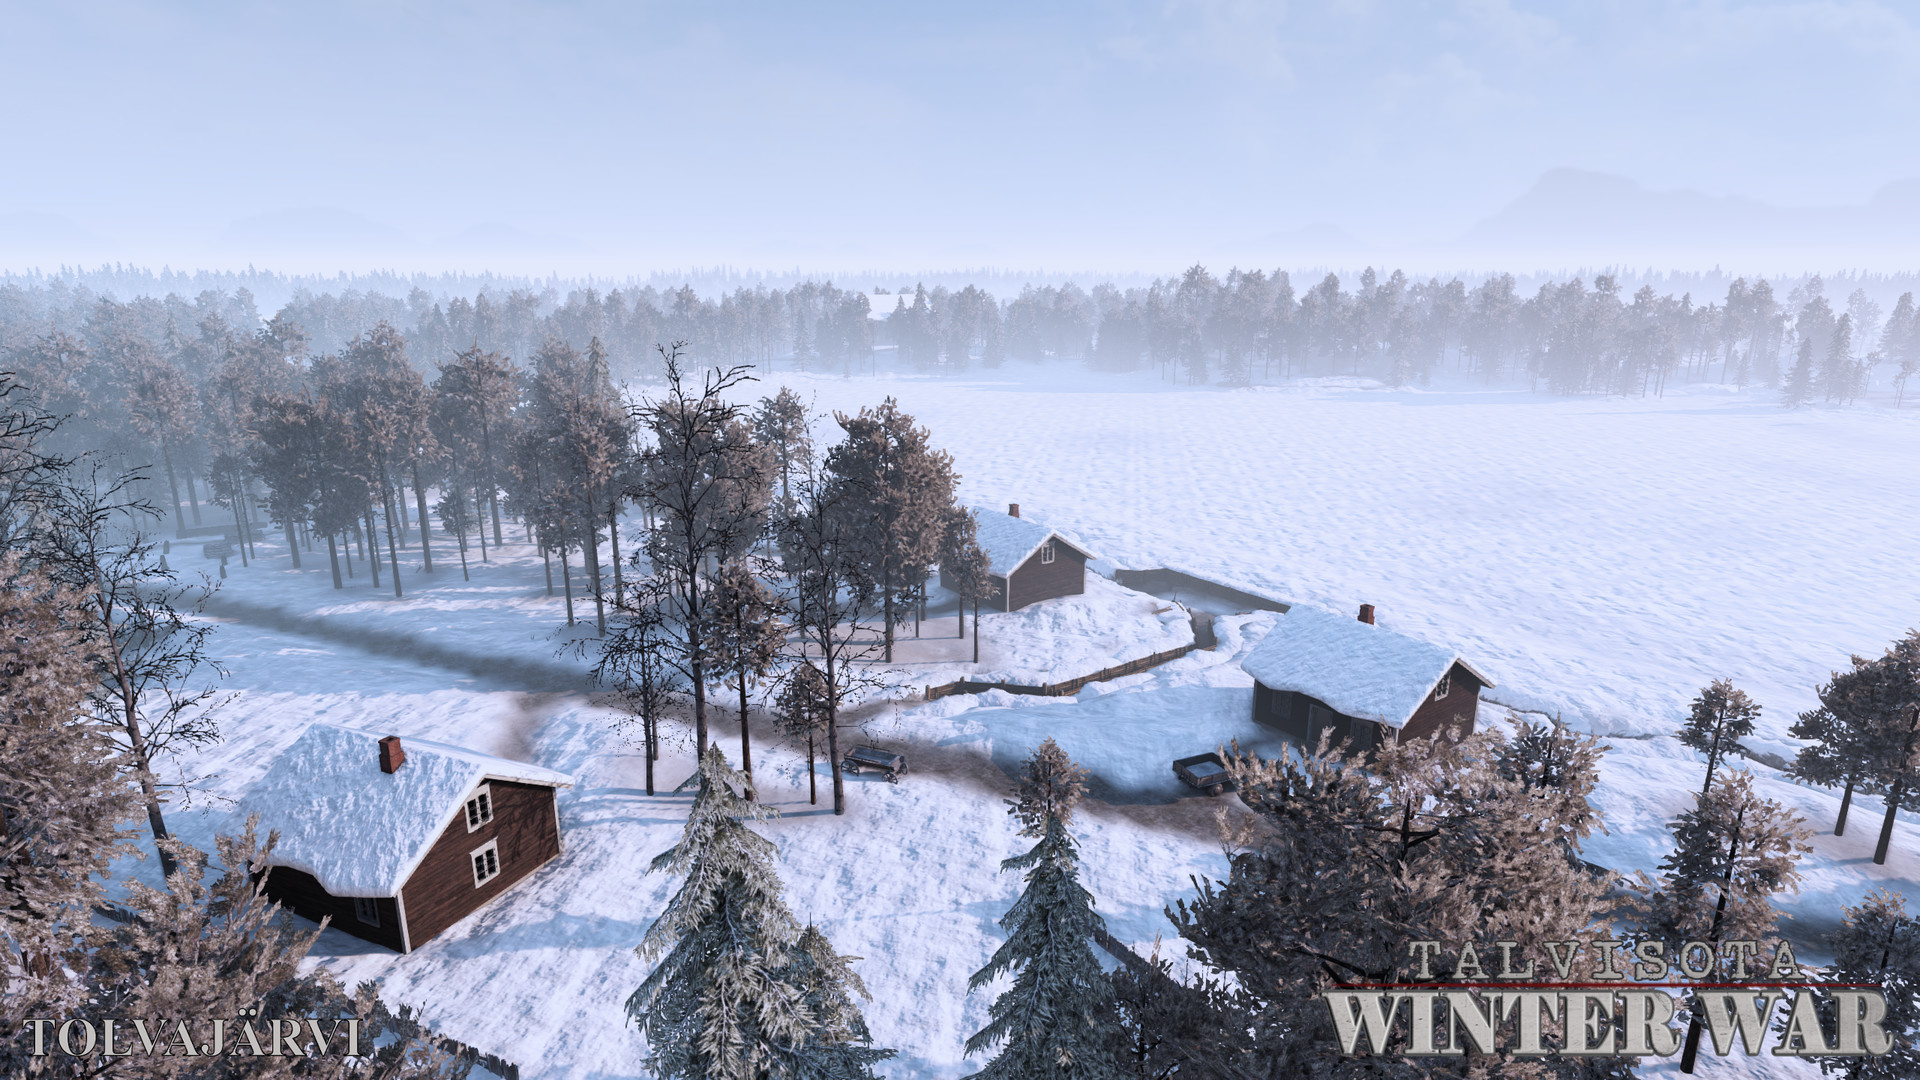 Talvisota: Winter War